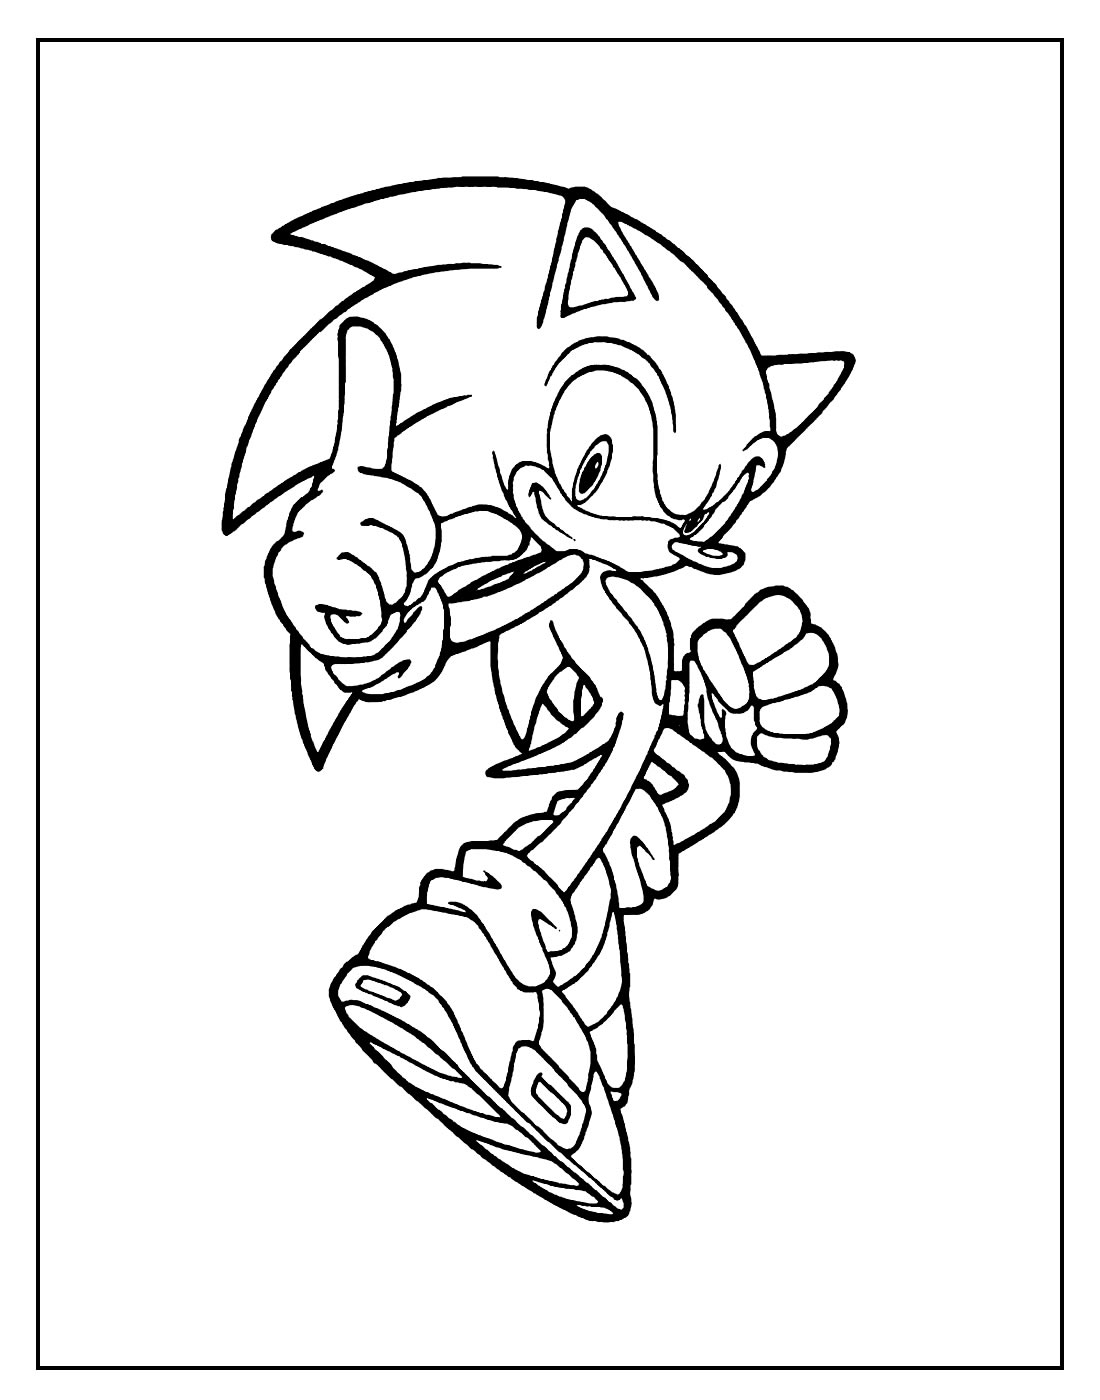 Desenho para pintar de Sonic